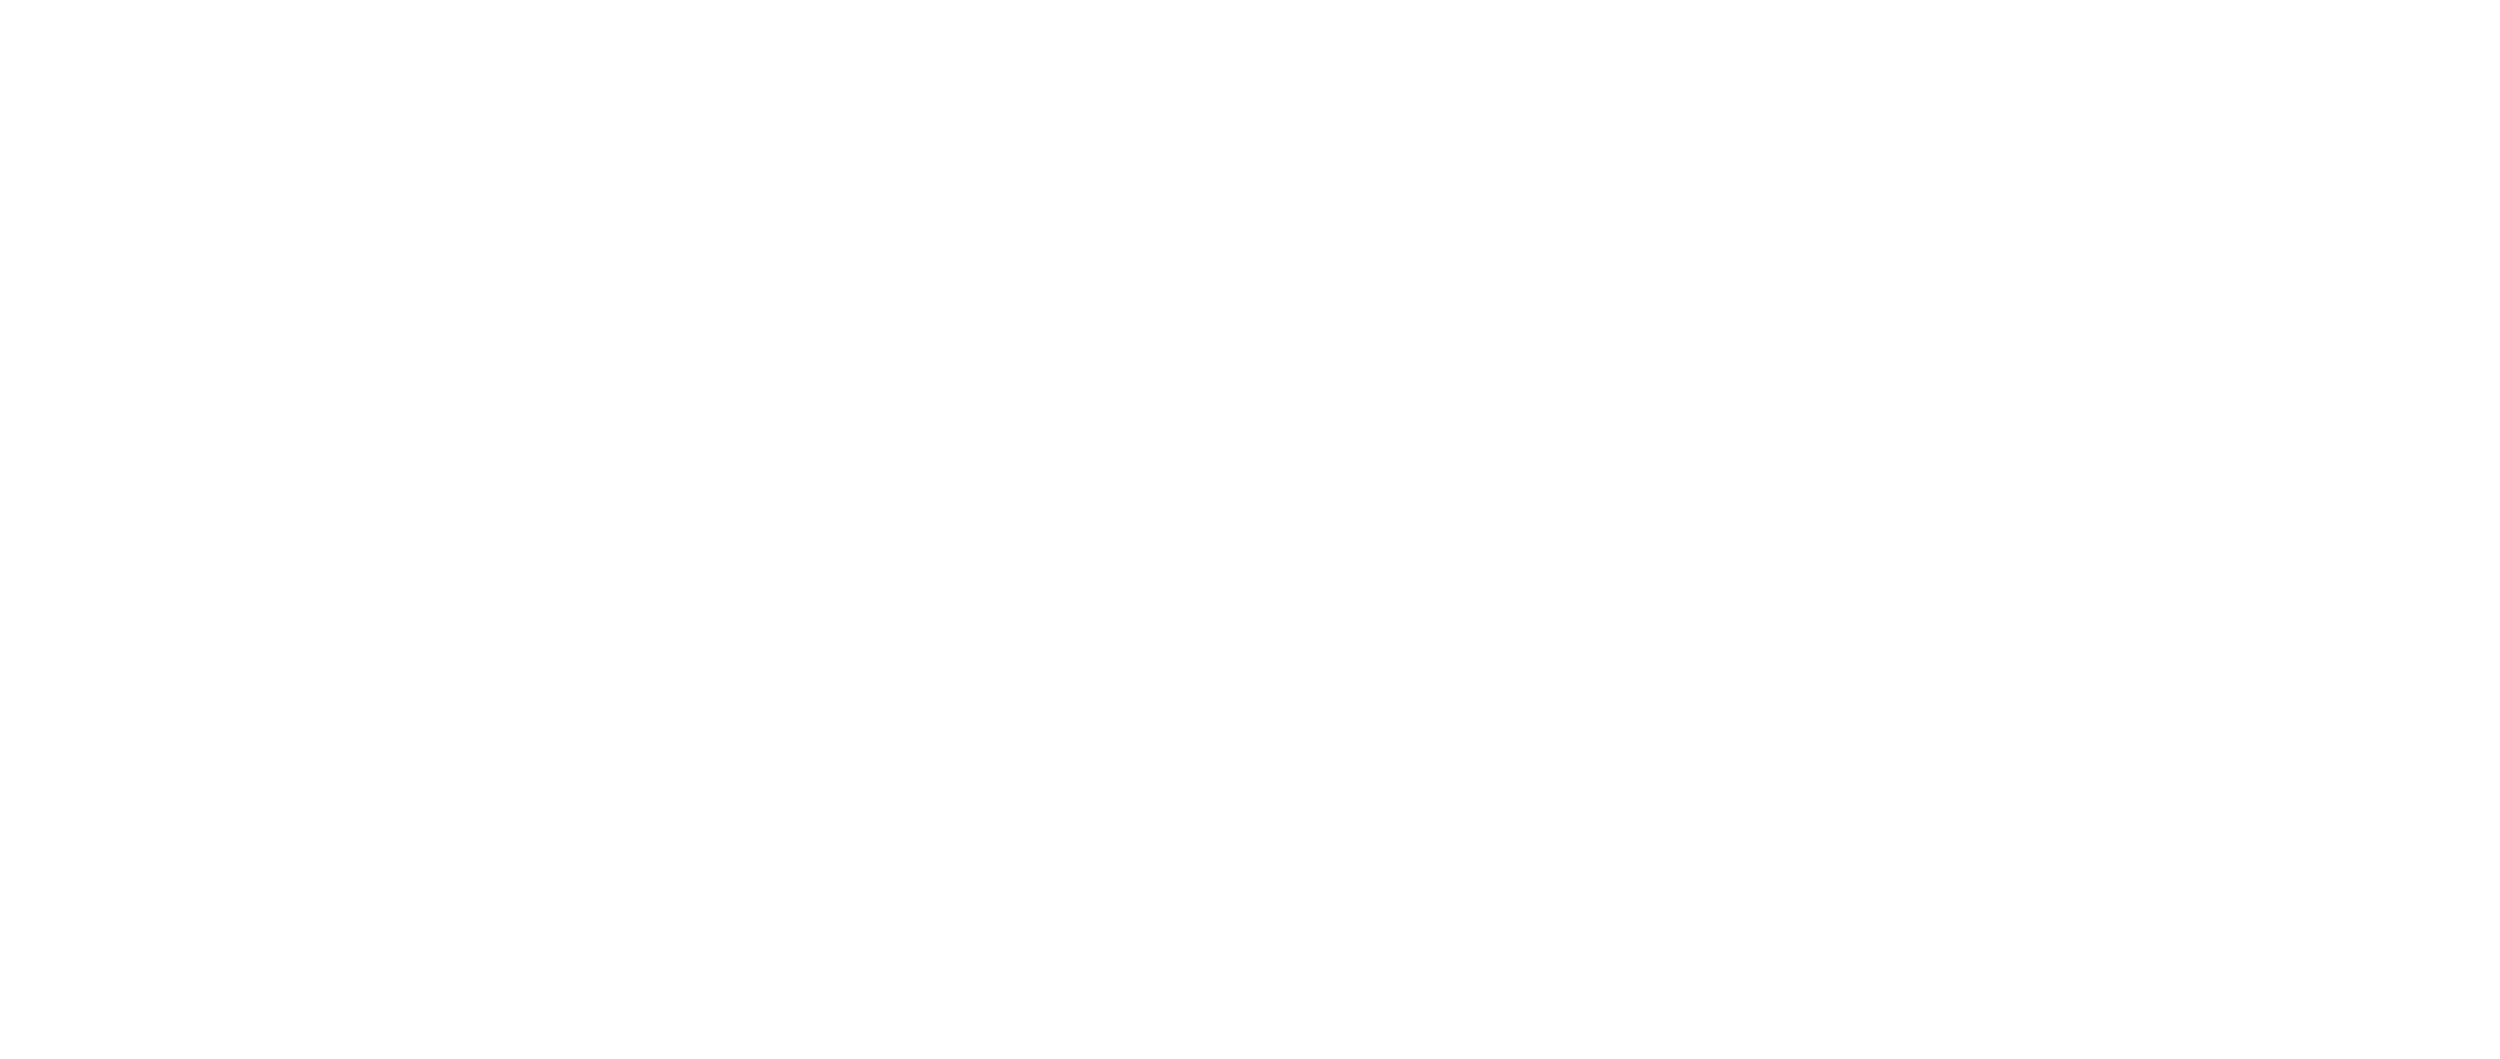 Nashville Parks Foundation